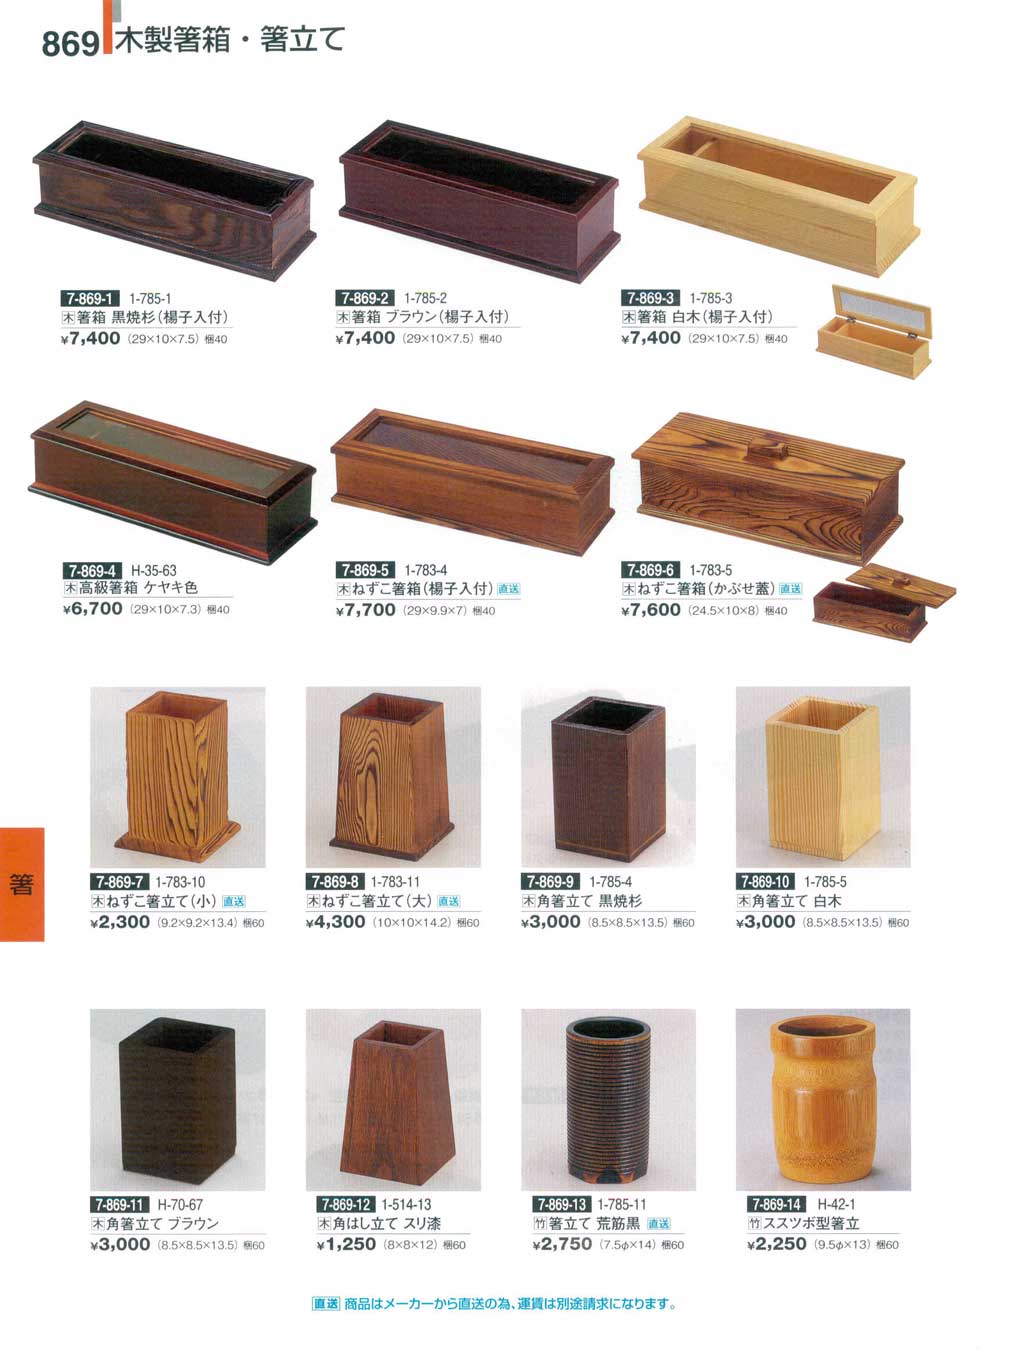 食器 木製箸箱・箸立て割烹漆器２７－869ページ